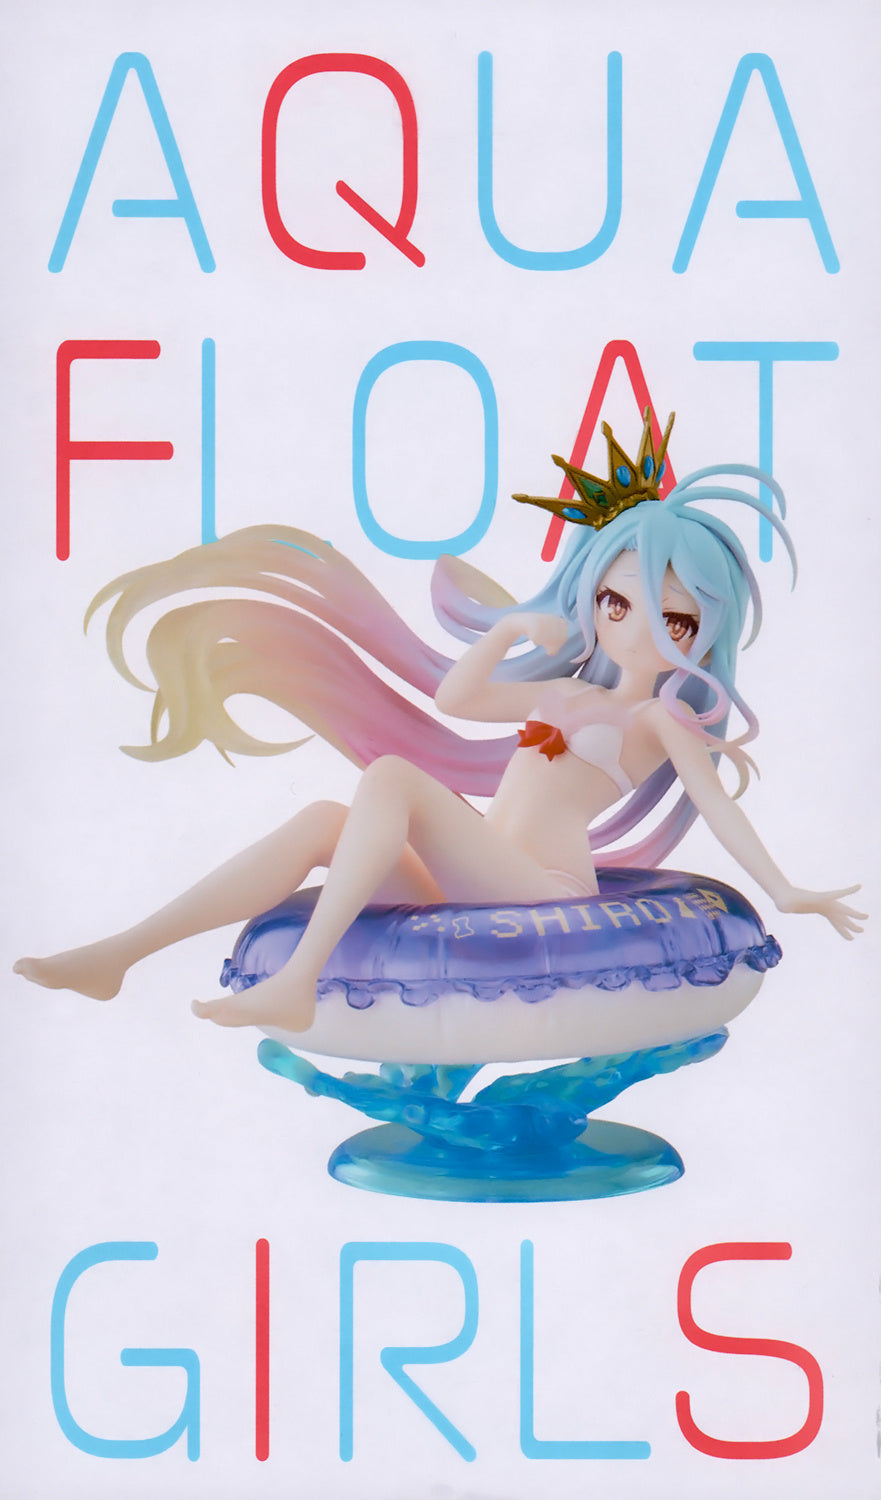 Aqua Float Girls Figure Shiro (No Game No Life)